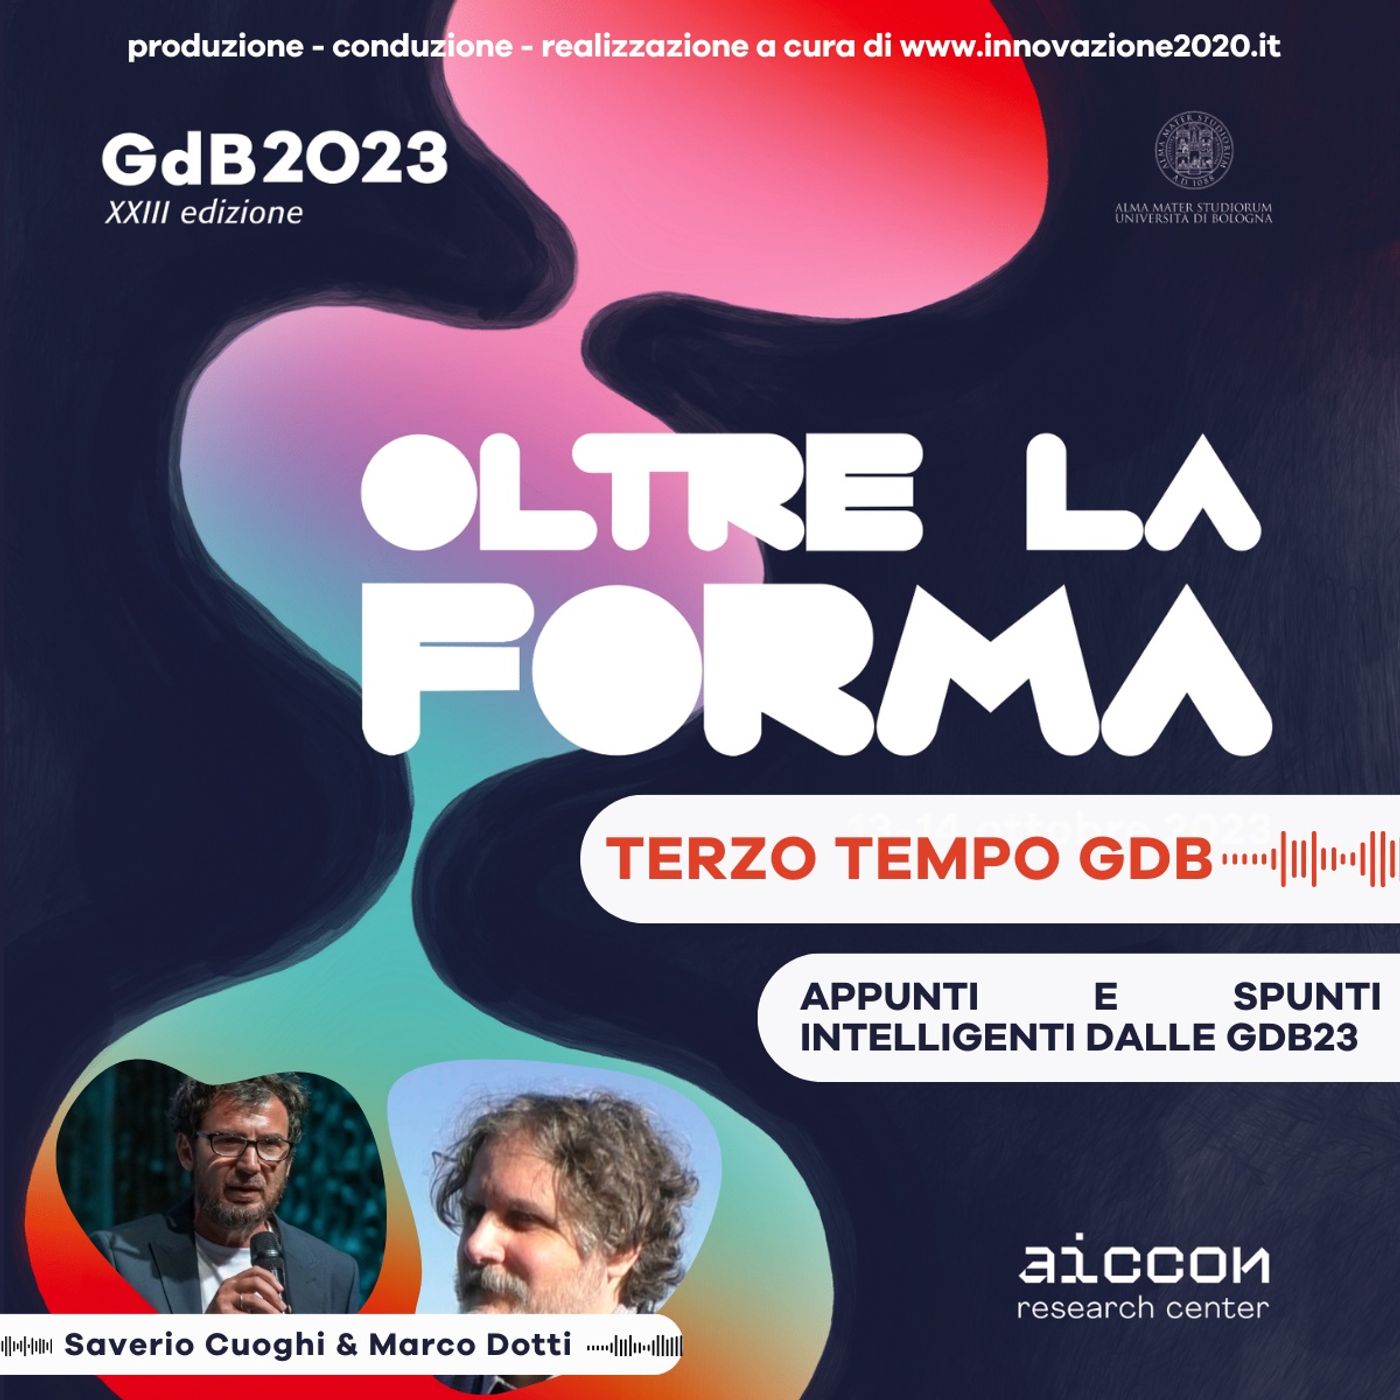 TerzoTempo GDB23 - Marco Dotti - Appunti intelligenti dalle GDB 23